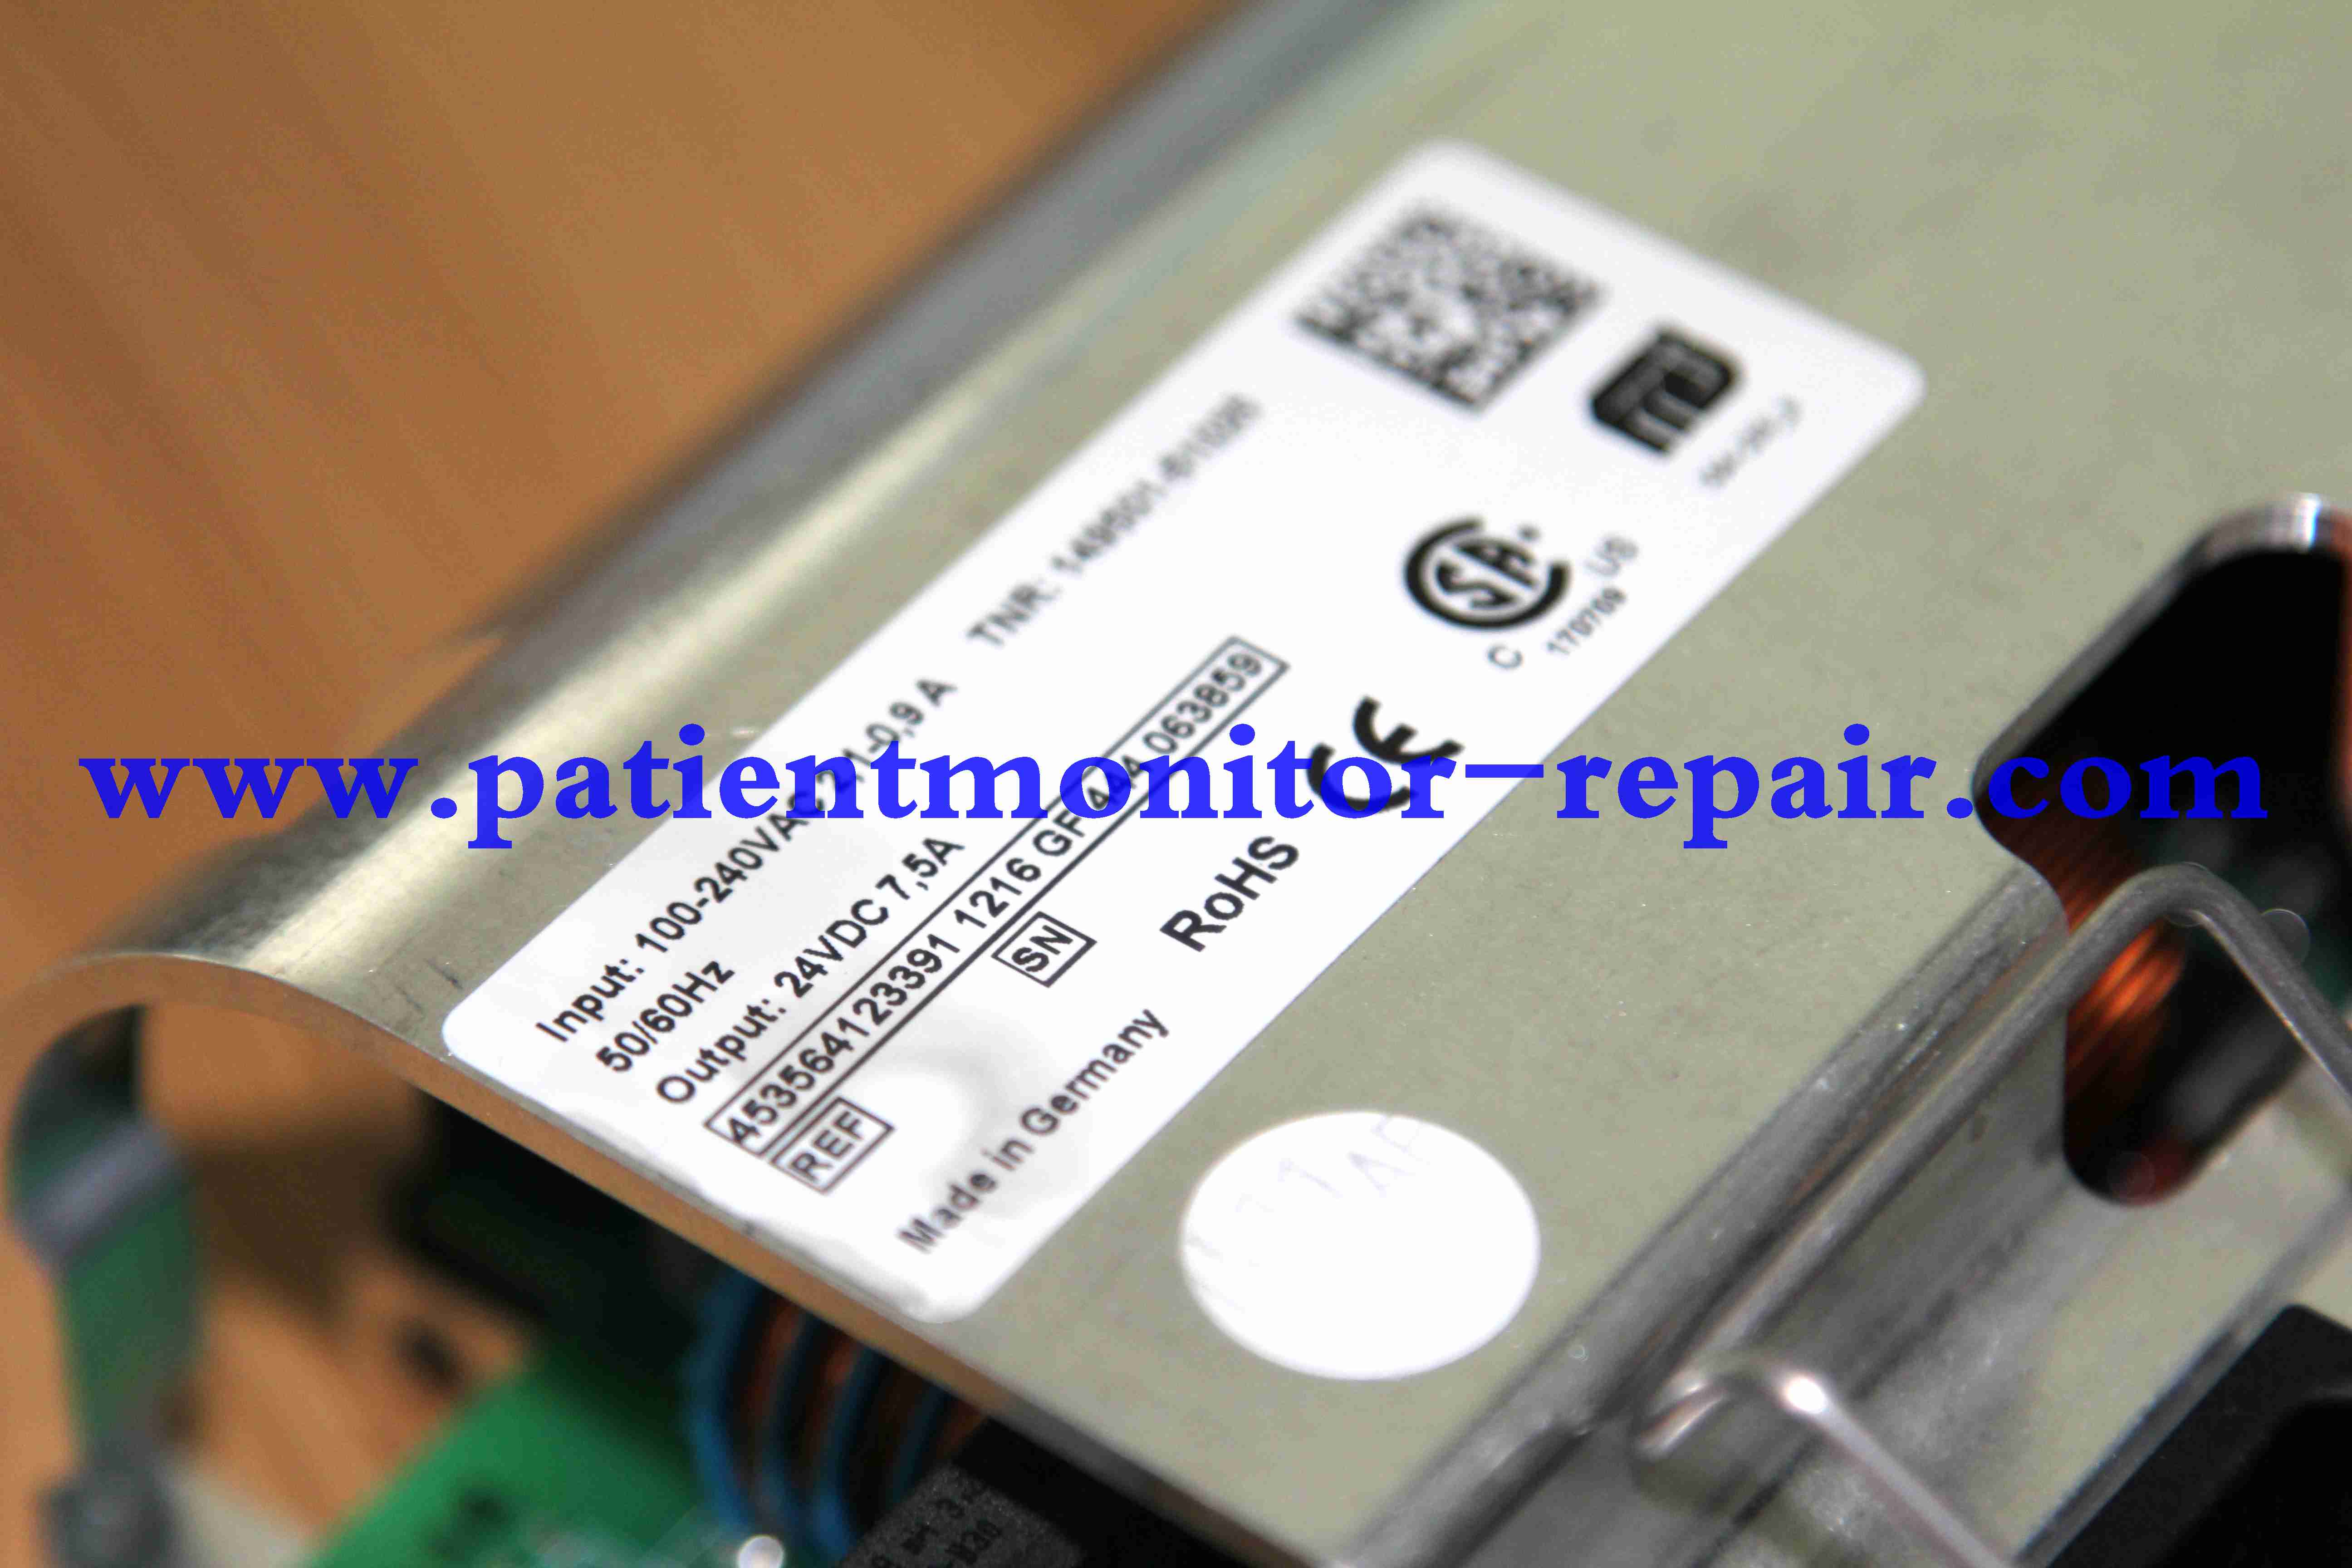  IntelliVue MX700 patient monitor power supply board TNR 149501-51025